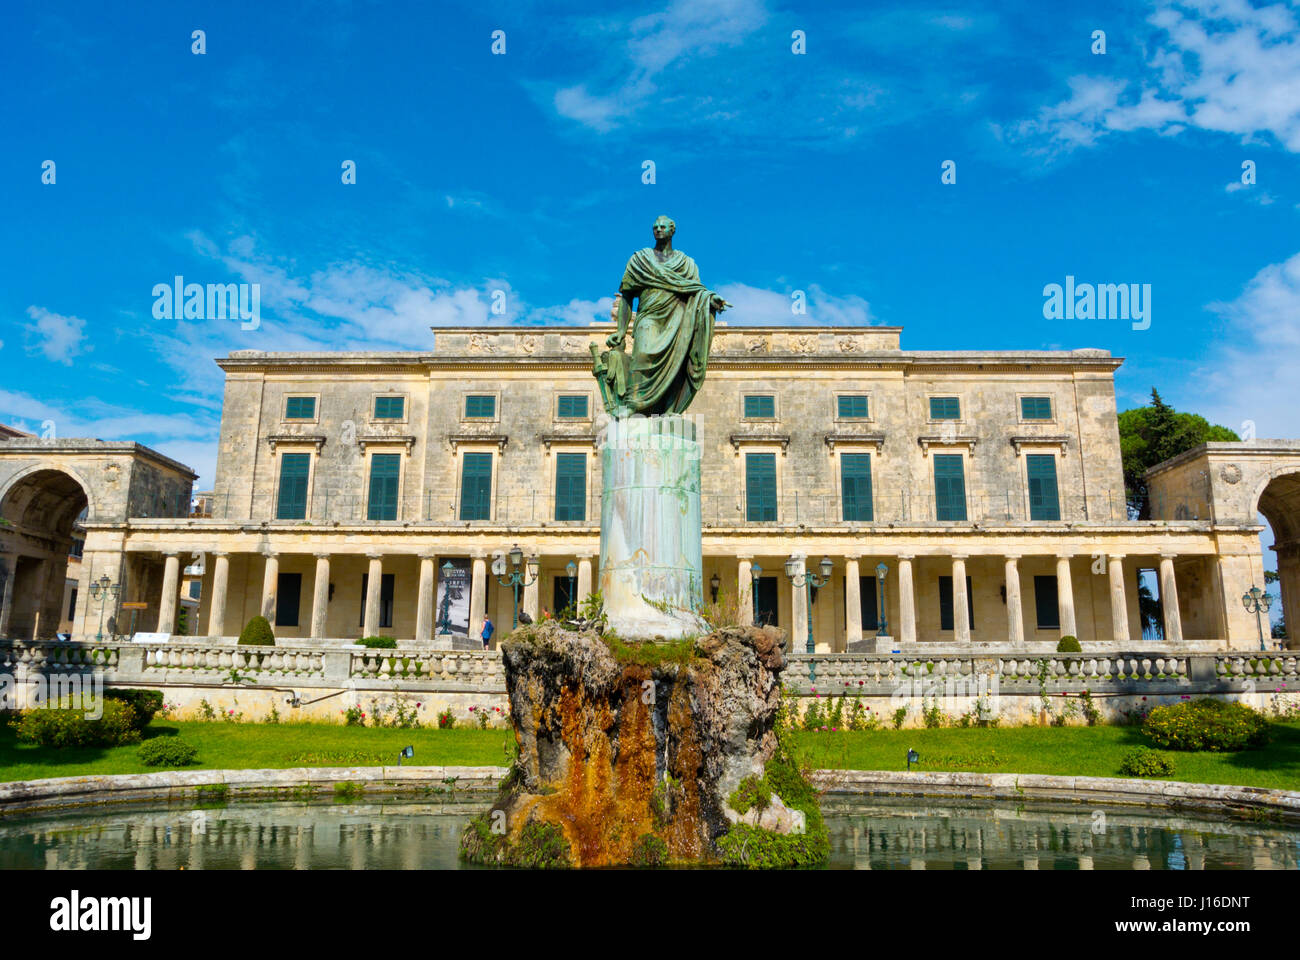 Statue of Frederick Adam, Palaia Anaktora, Old Palace, Palace of St Michael and St George, Corfu town, Greece Stock Photo